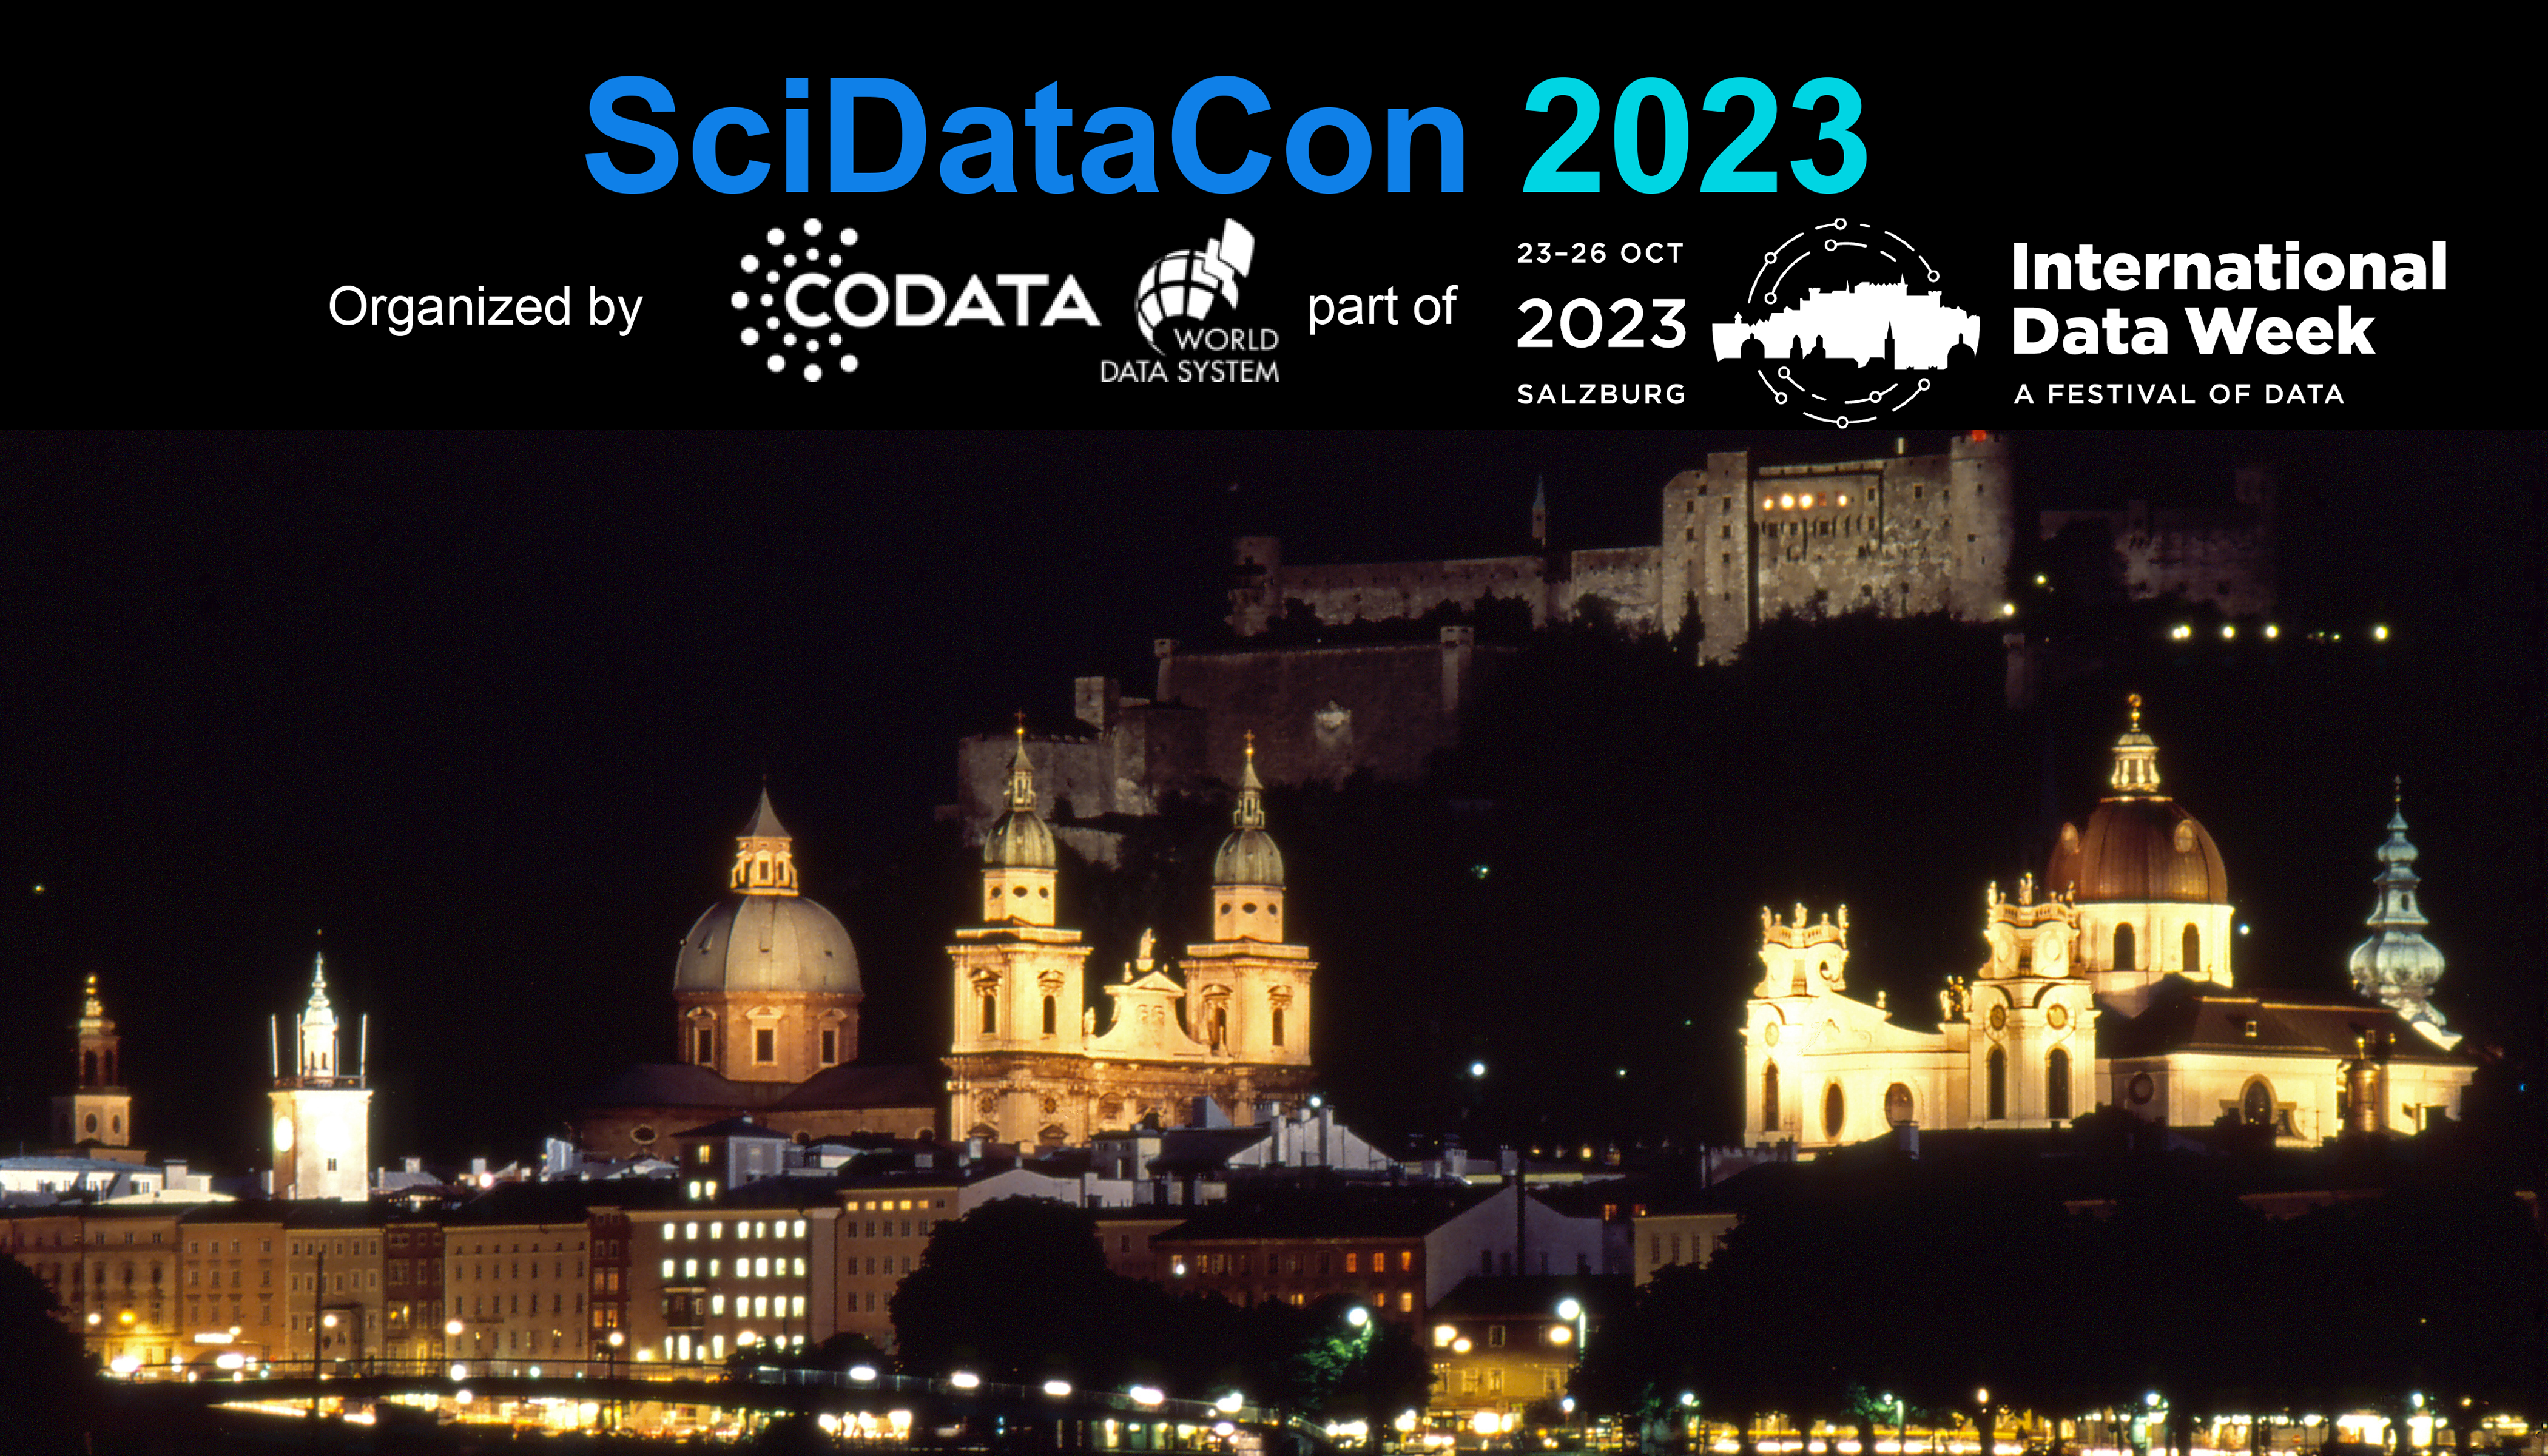 "SciDataCon2023" Organized by CODATA, World Data System, as part of International Data Week 2023 in Salzburg, Austria